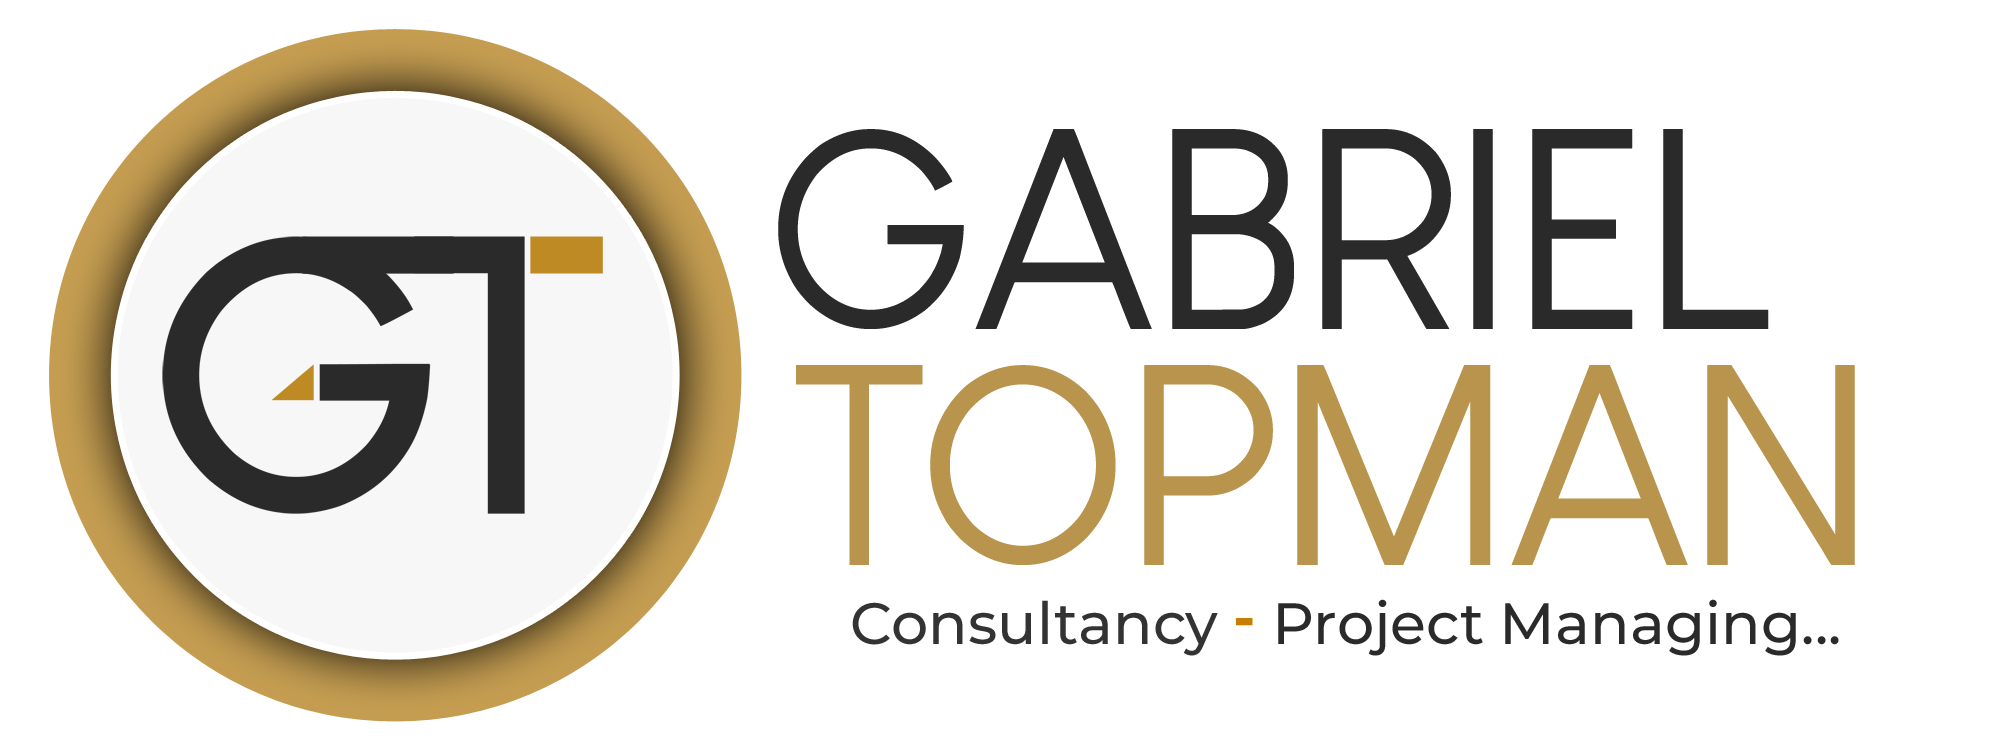 Gabriel Topman Consultancy-Project Managing